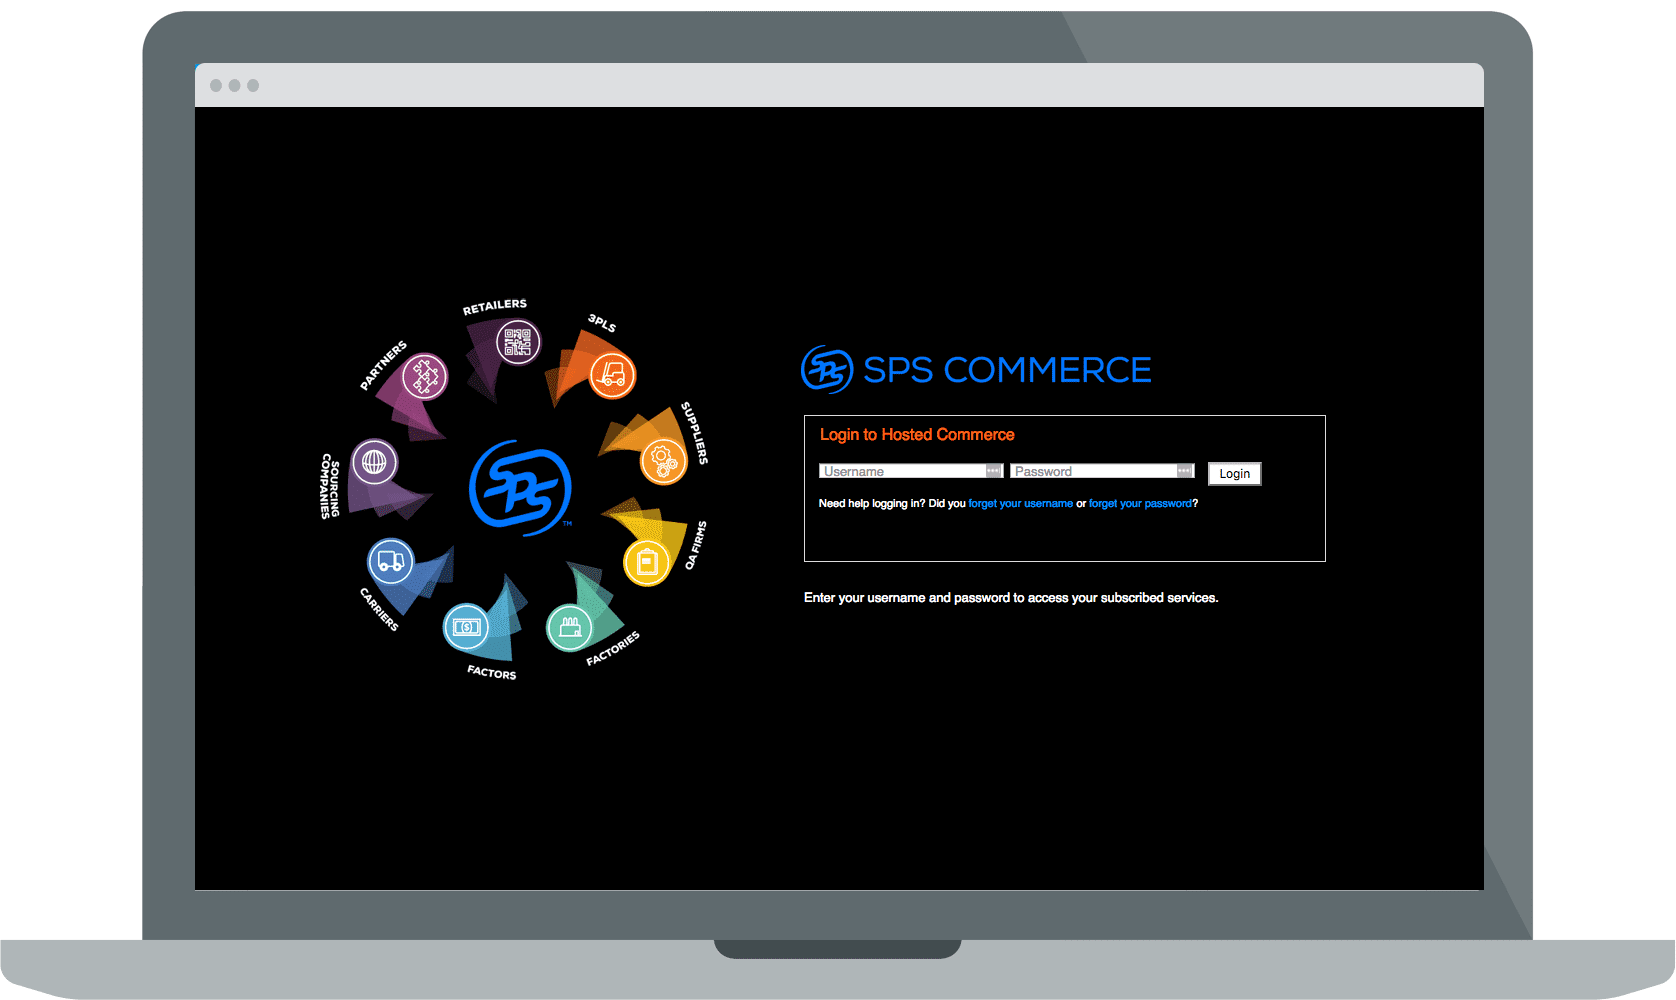 SPS Commerce Webforms login (SPS Portal login)